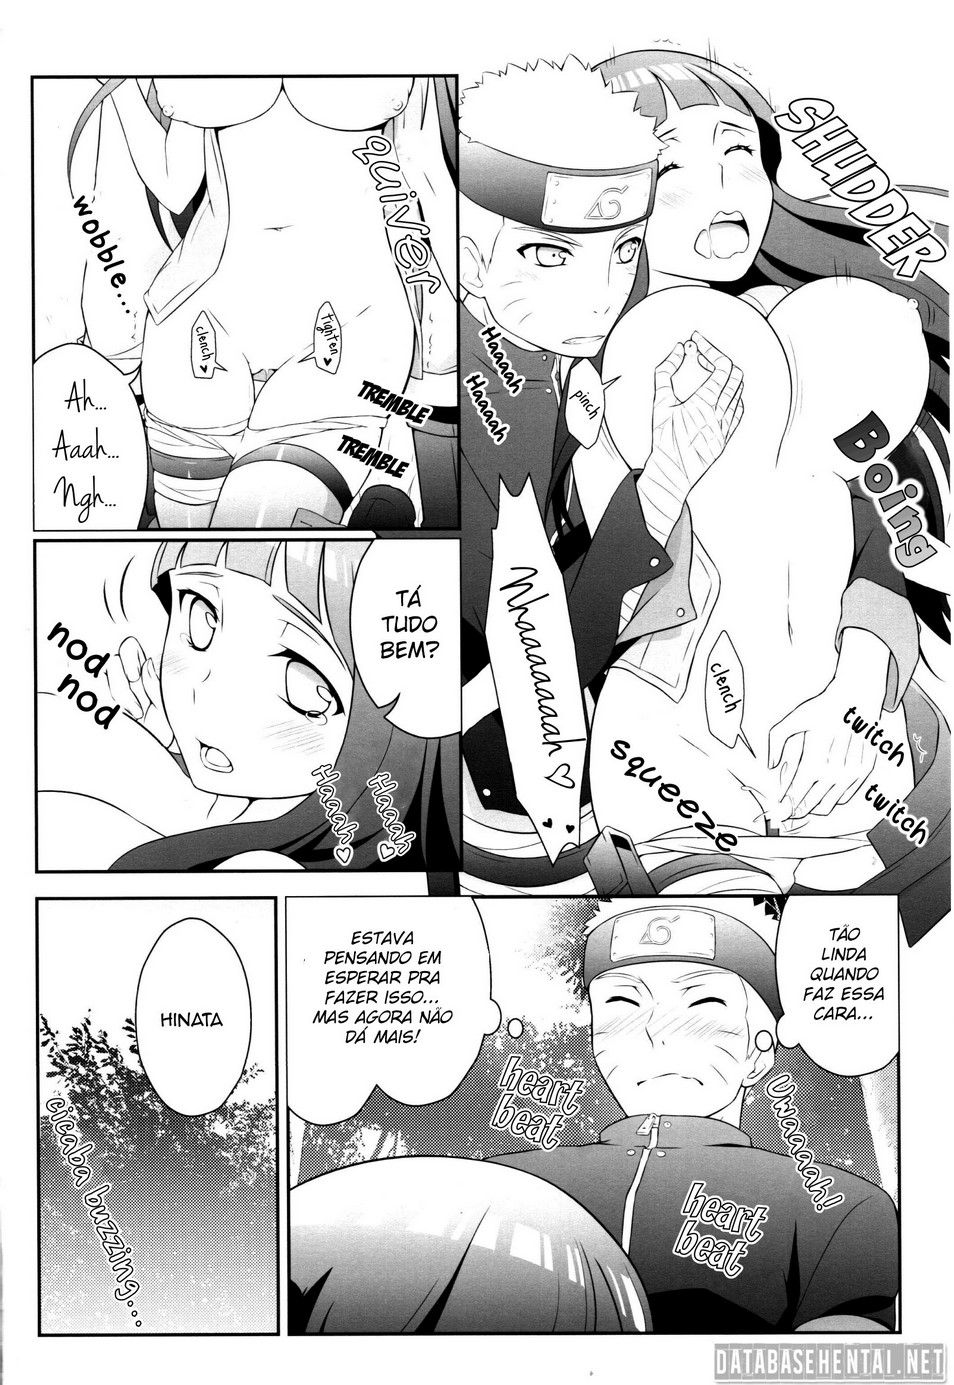 Naruto pornô na missão com Hinata